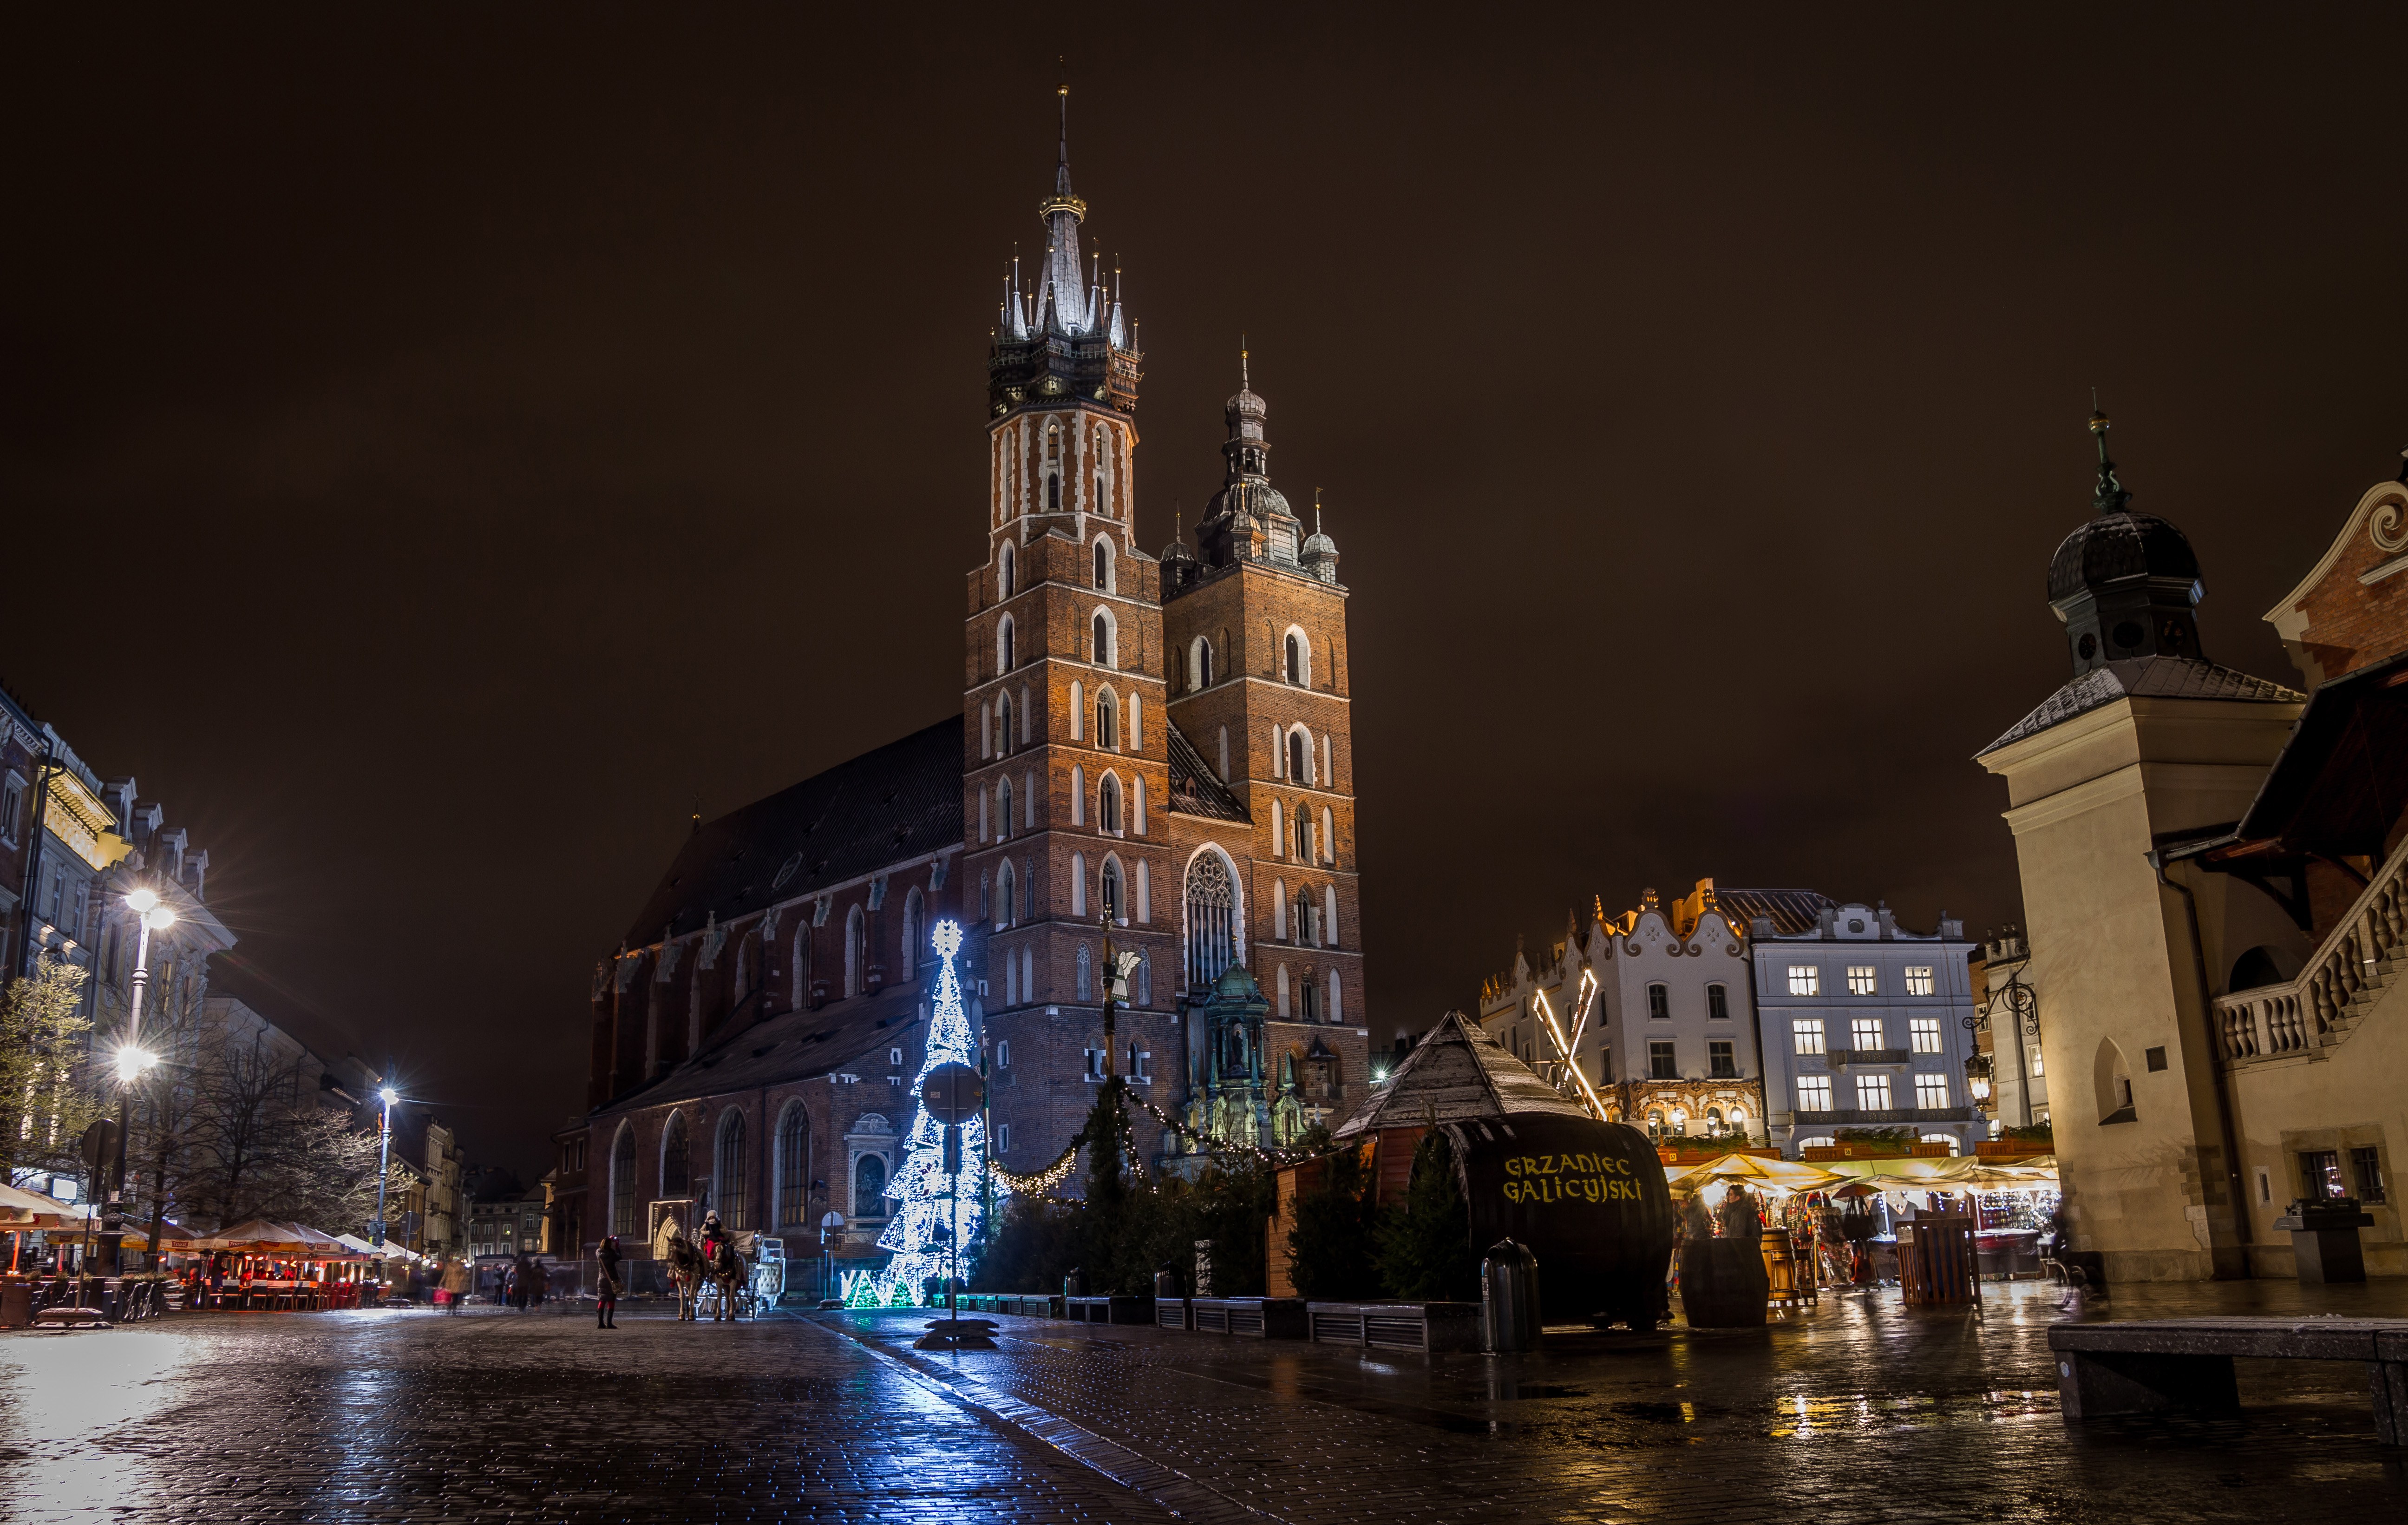 St mary's basilica (kościół mariacki) during christmas, krakow poland photo